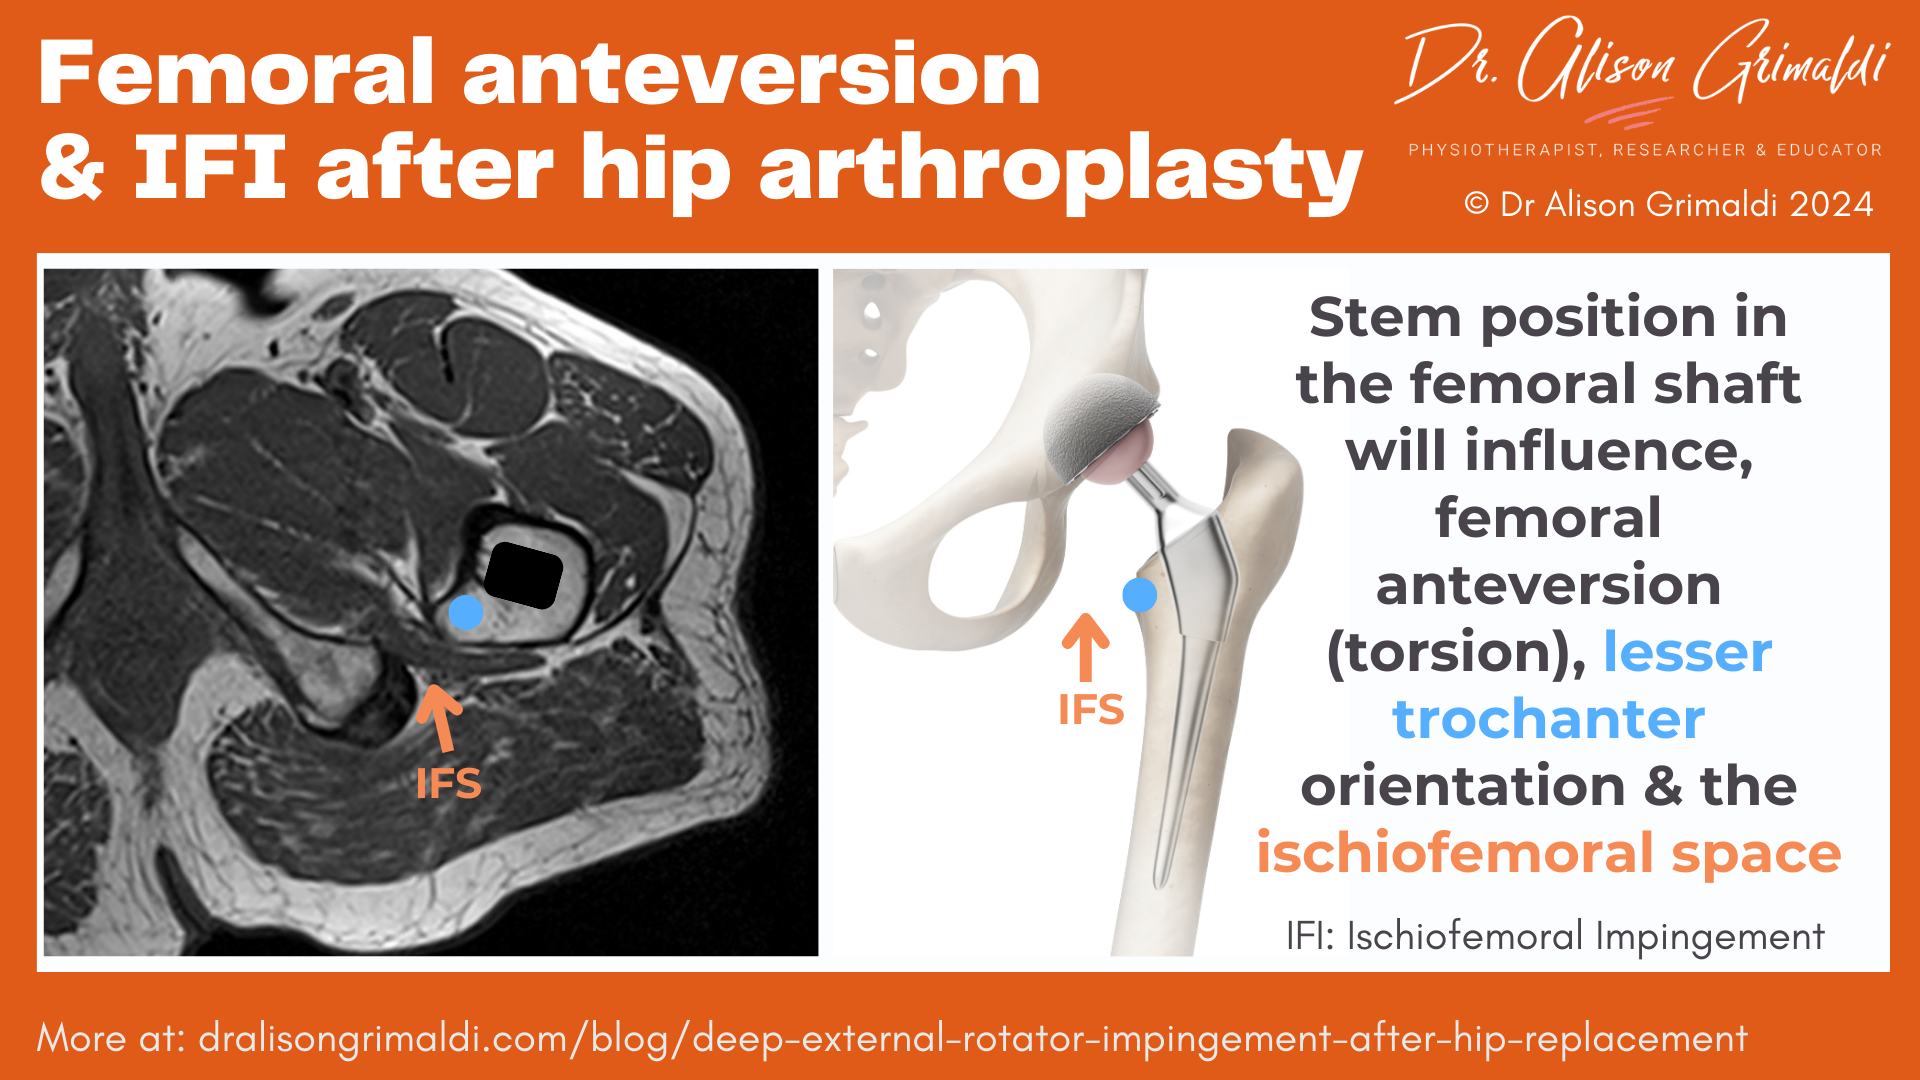 femoral-anteversion-&-IFI-after-hip-arthroplasty